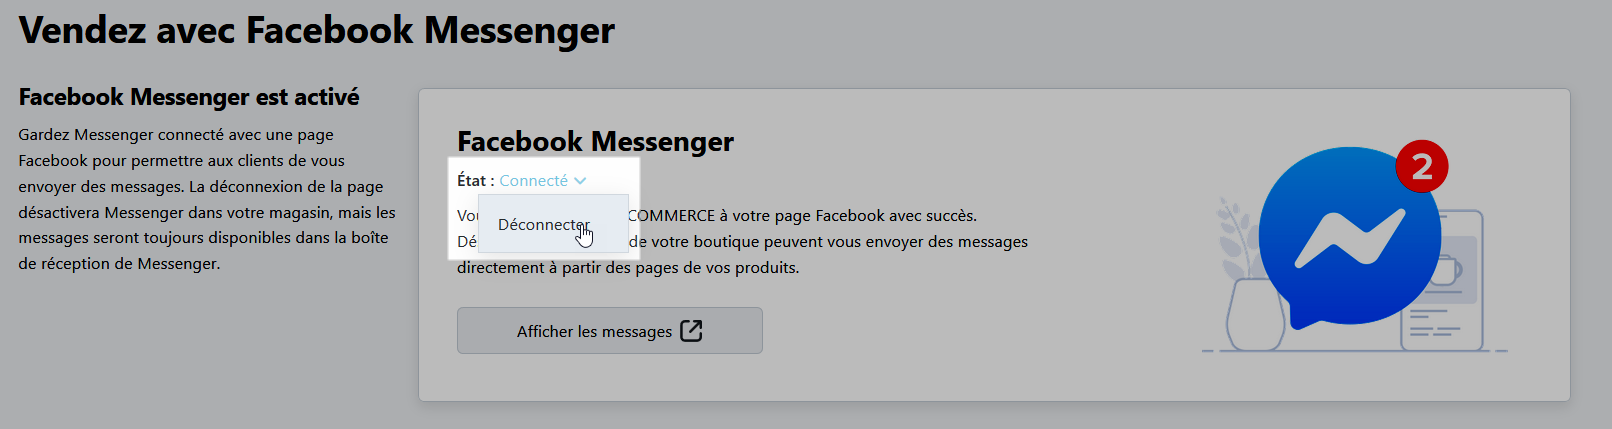 Déconnecter Facebook Messenger